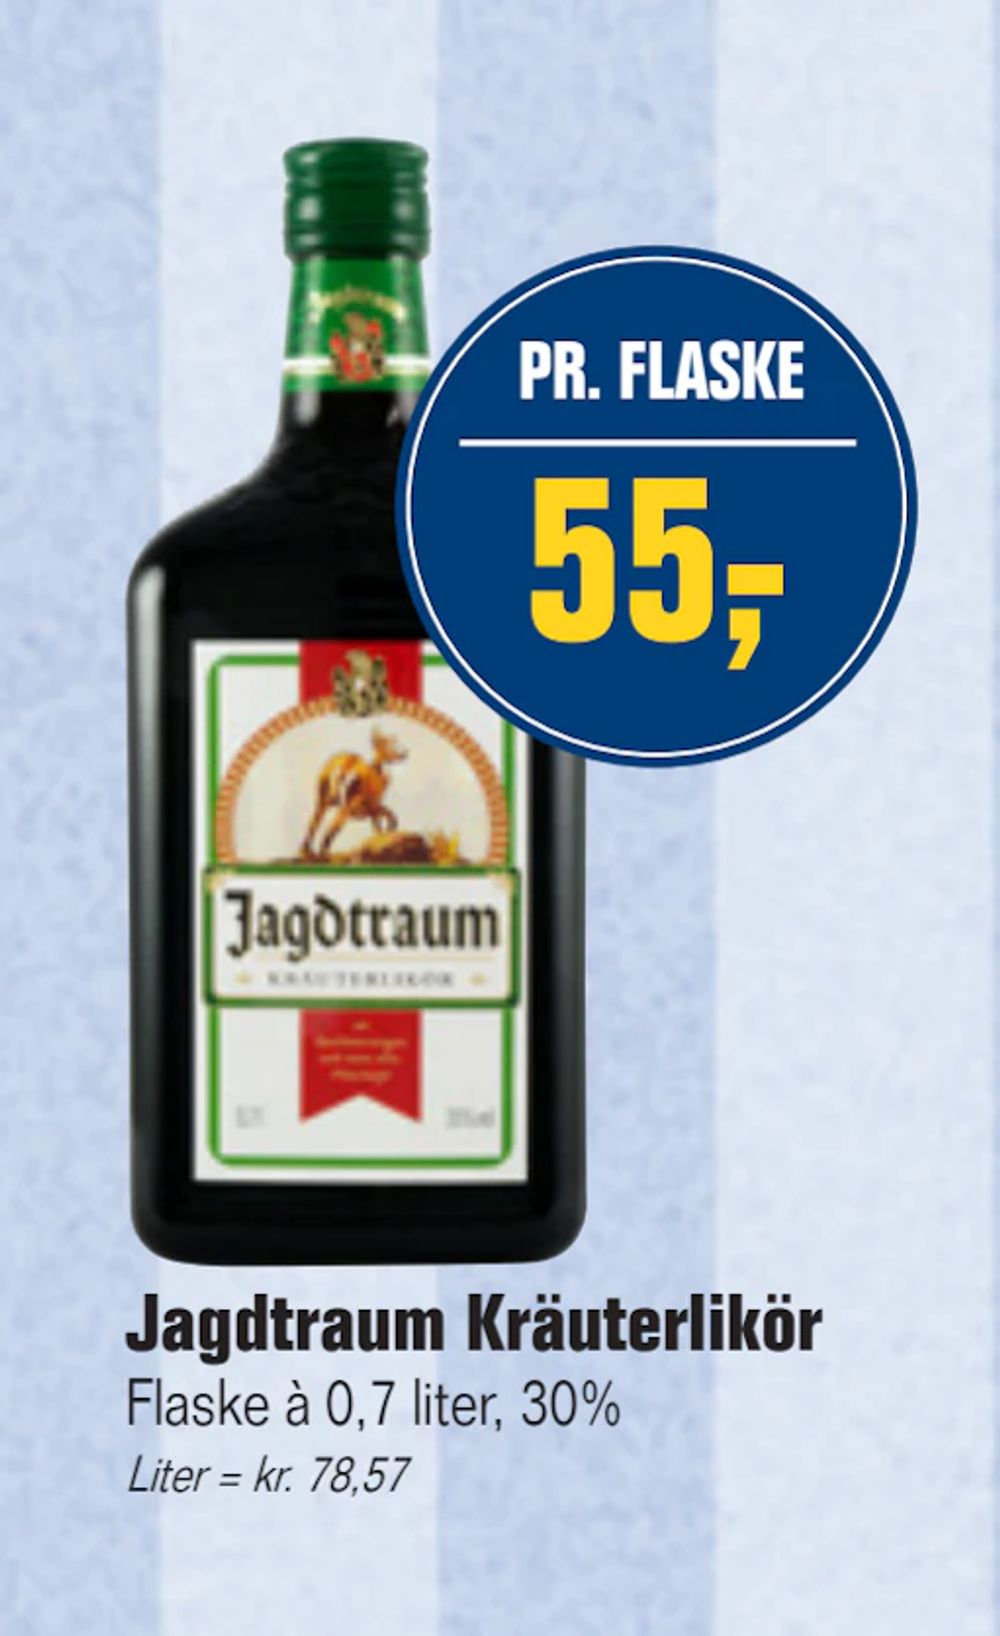 Tilbud på Jagdtraum Kräuterlikör fra Otto Duborg til 55 kr.